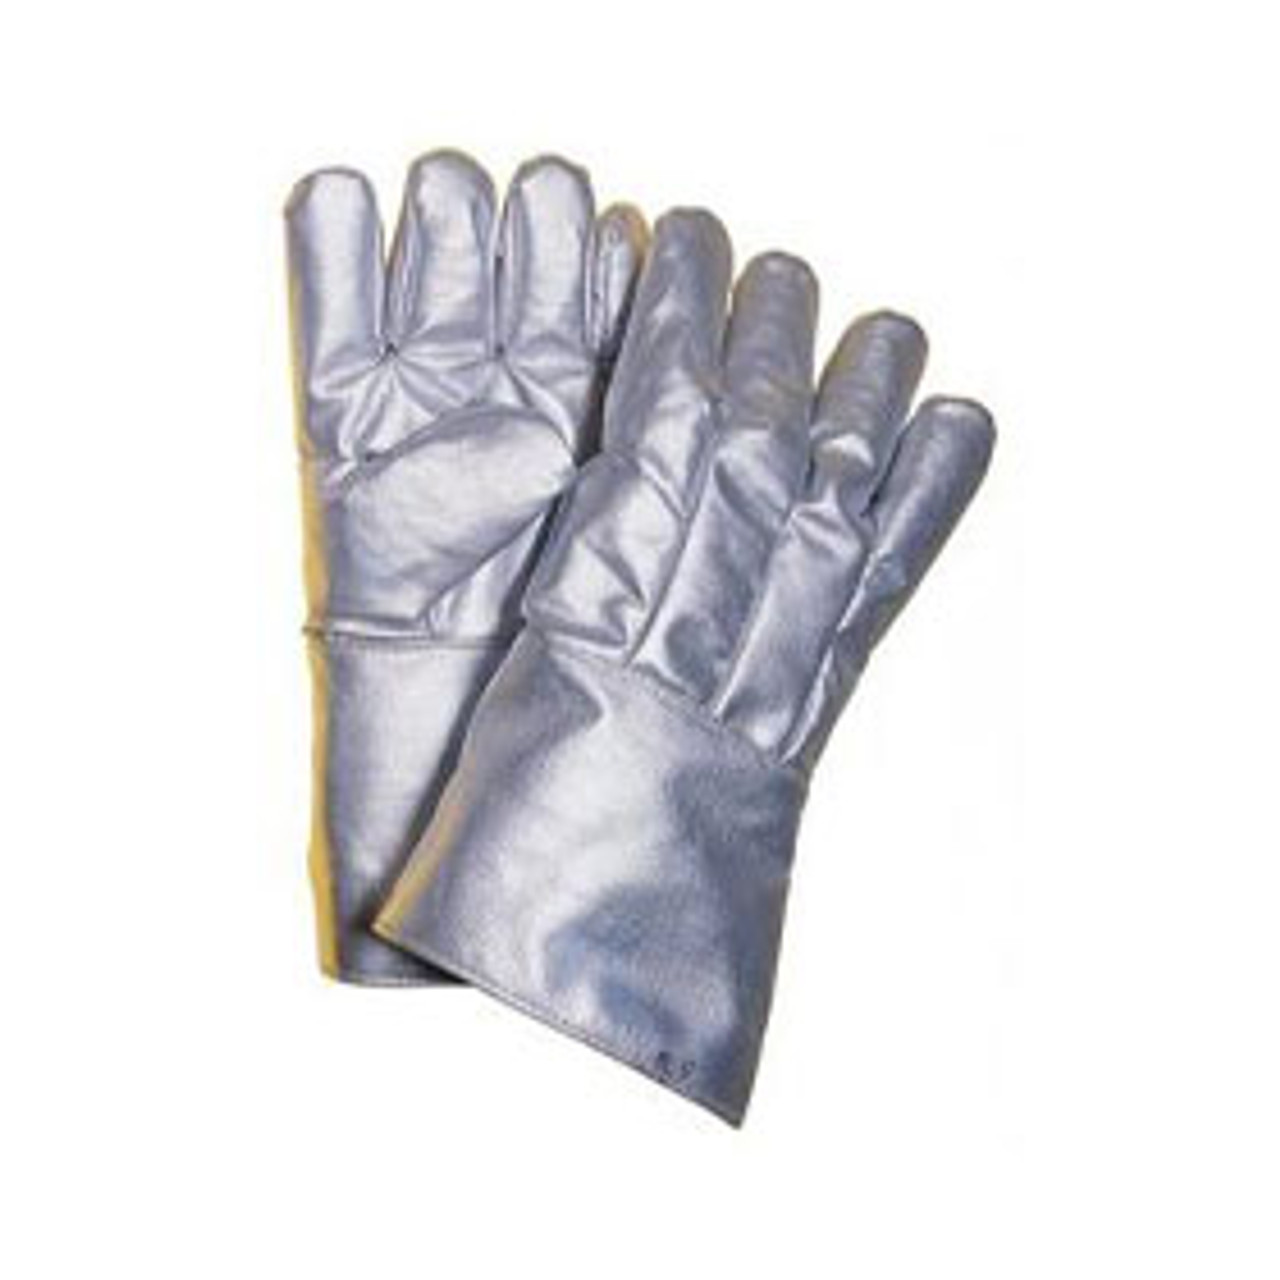 Aluminized Handling Glove